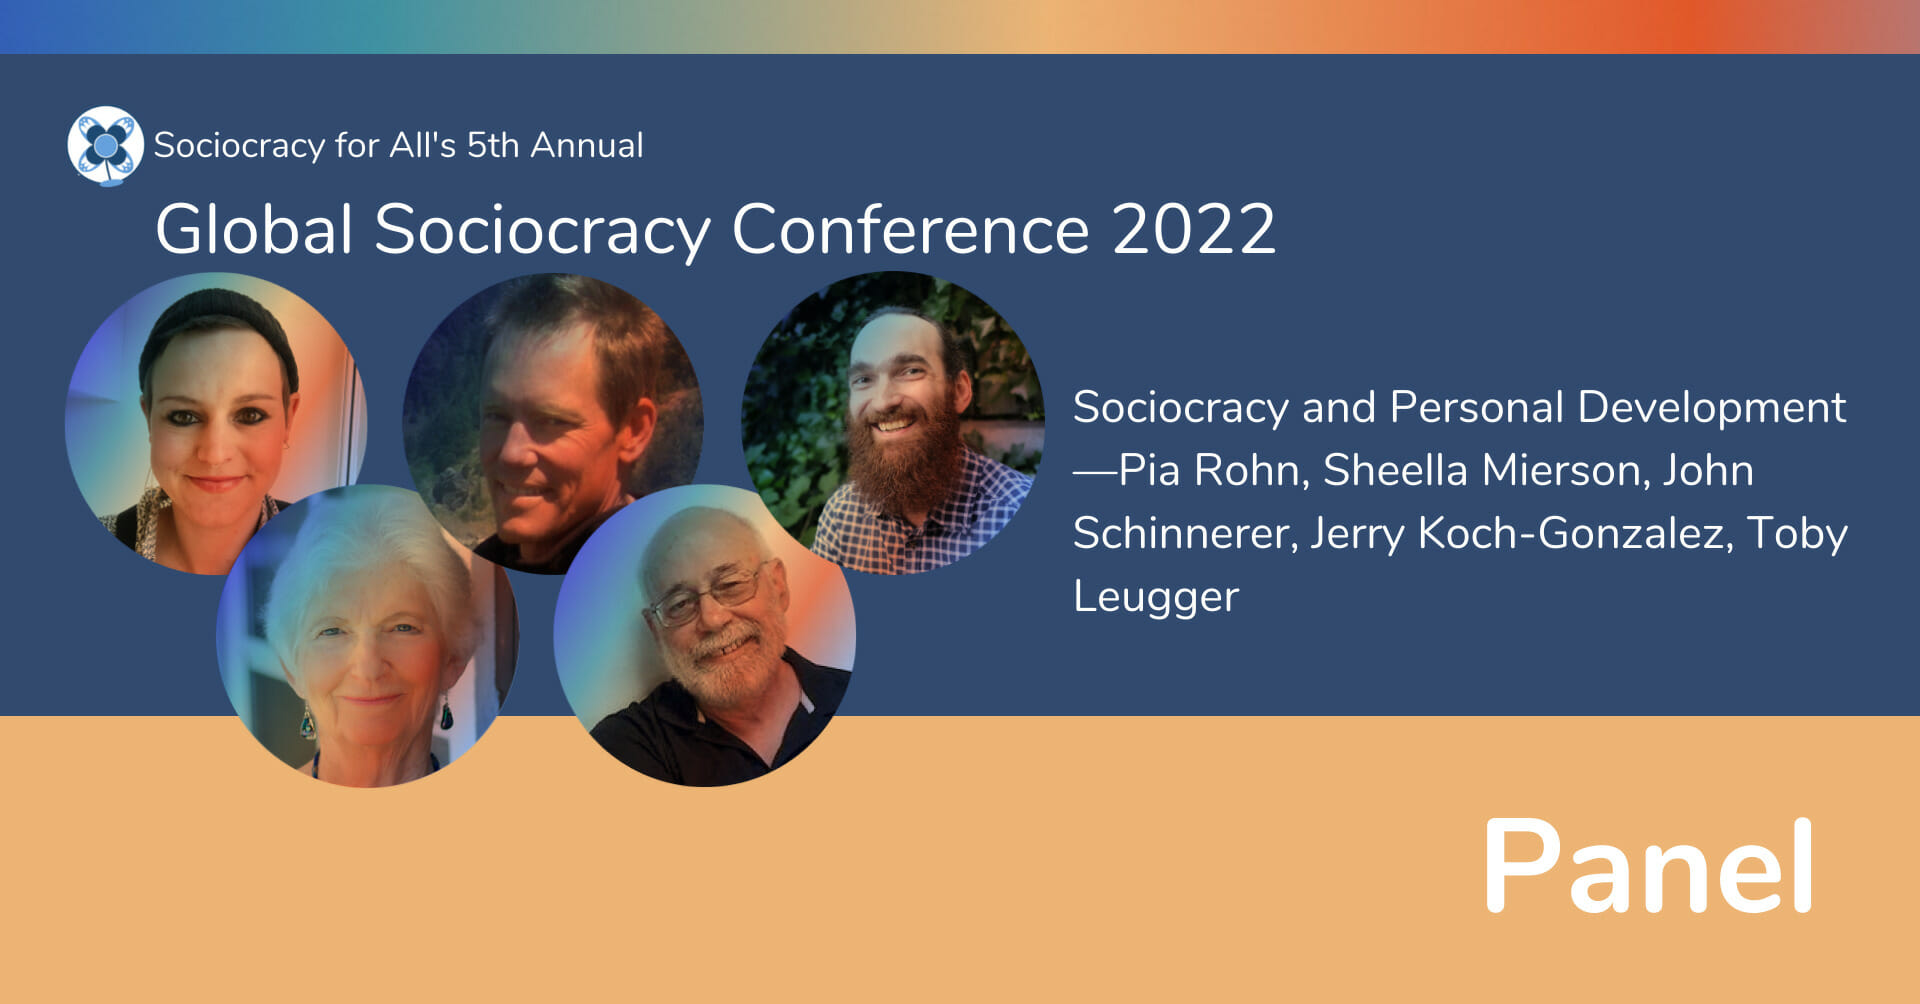 Sociocracy and personal development —Pia Rohn, Sheella Mierson, John Schinnerer, Jerry Koch-Gonzalez and Toby Leugger